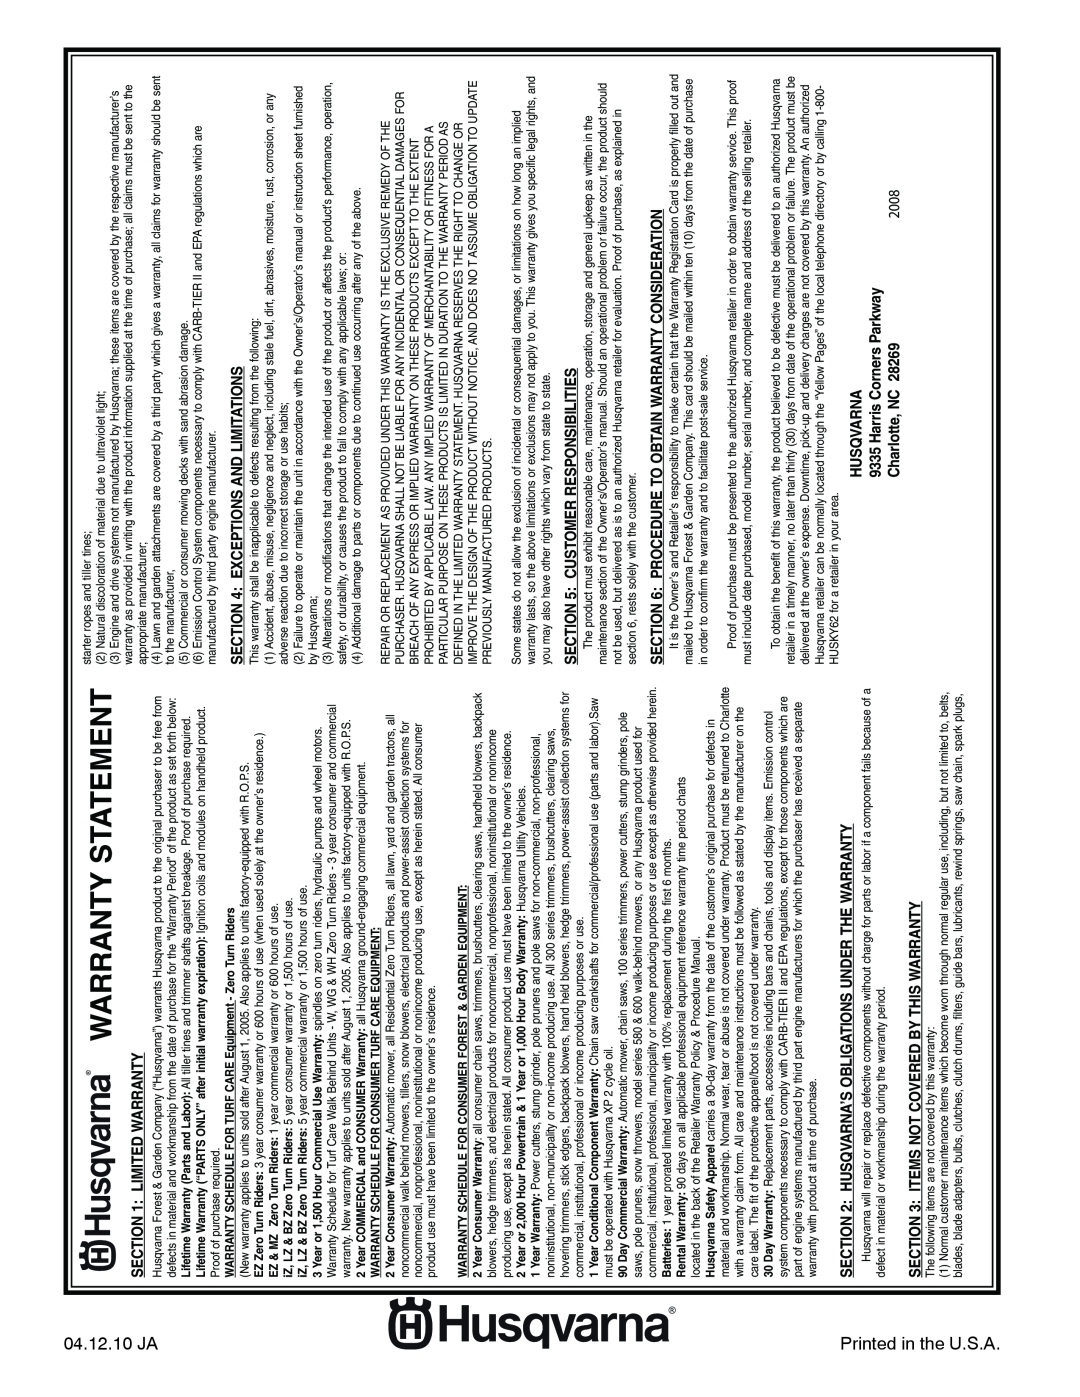 Husqvarna 96045002201 Warranty Statement, 2008, Charlotte, NC, Warranty Schedule For Consumer Turf Care Equipment 